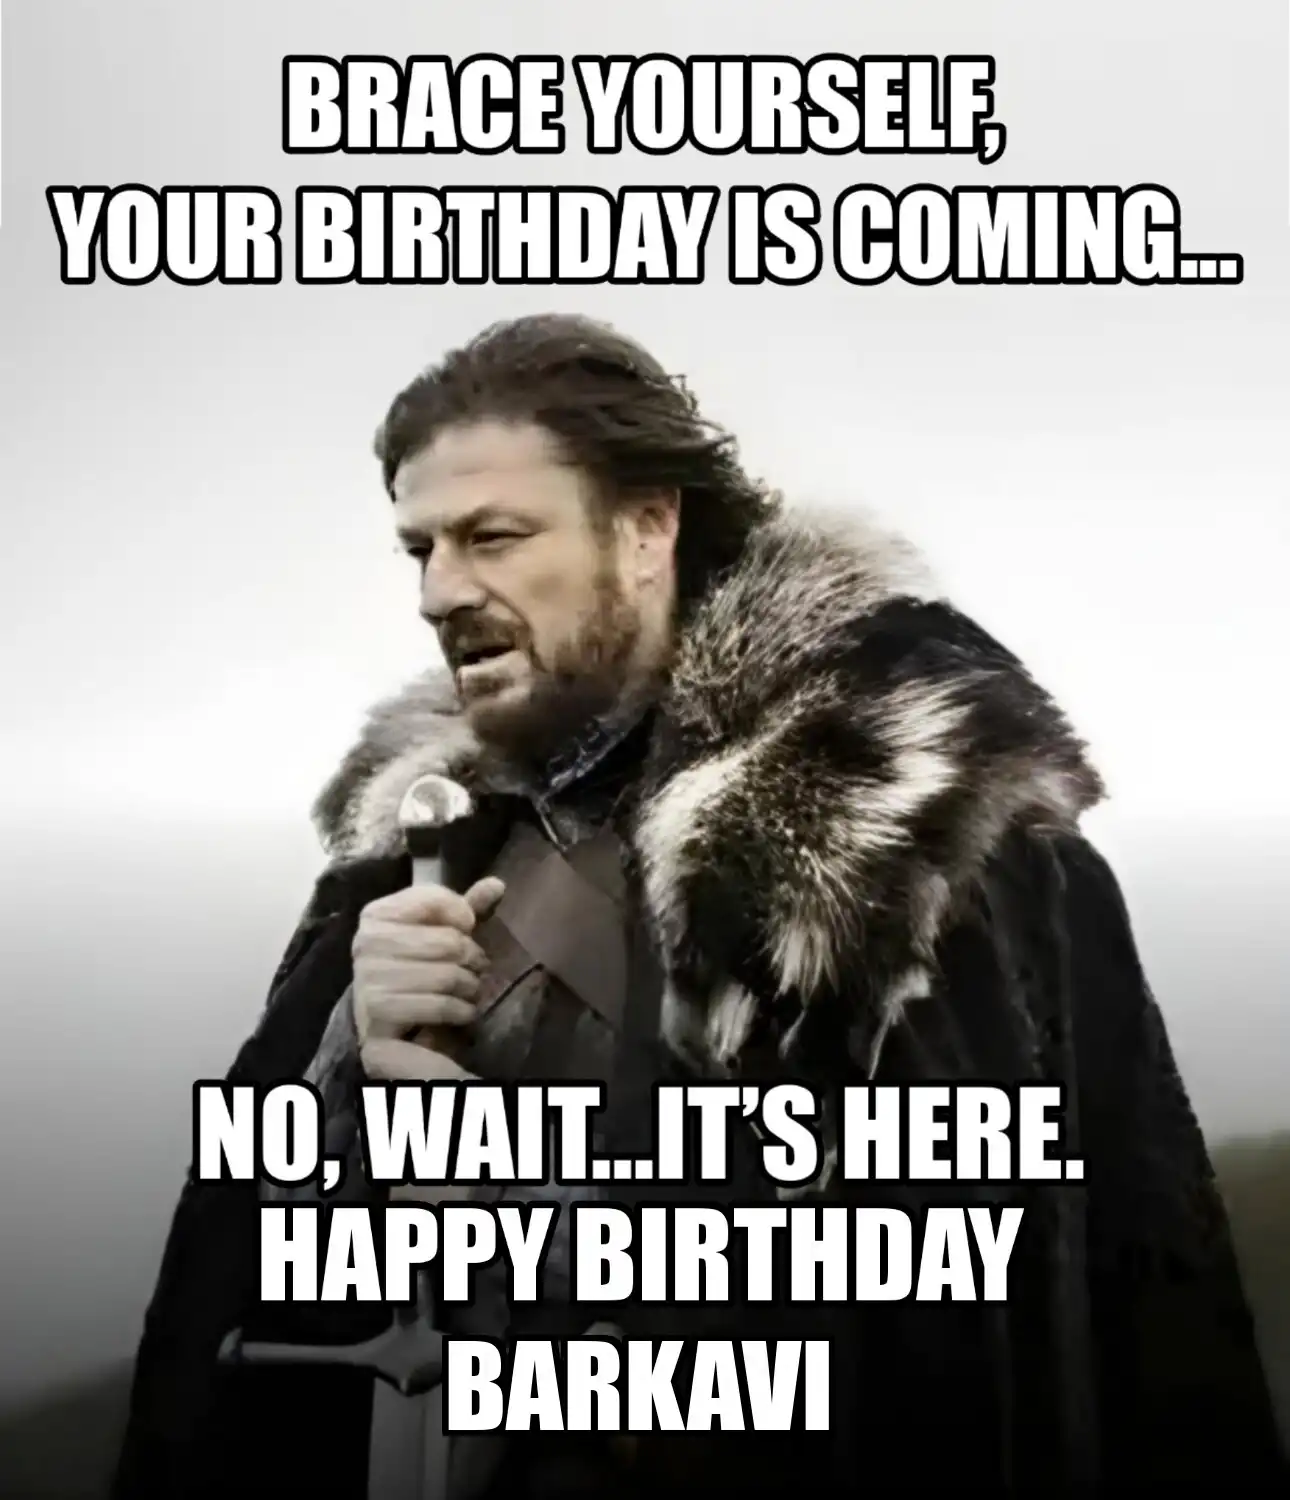 Happy Birthday Barkavi Brace Yourself Your Birthday Is Coming Meme